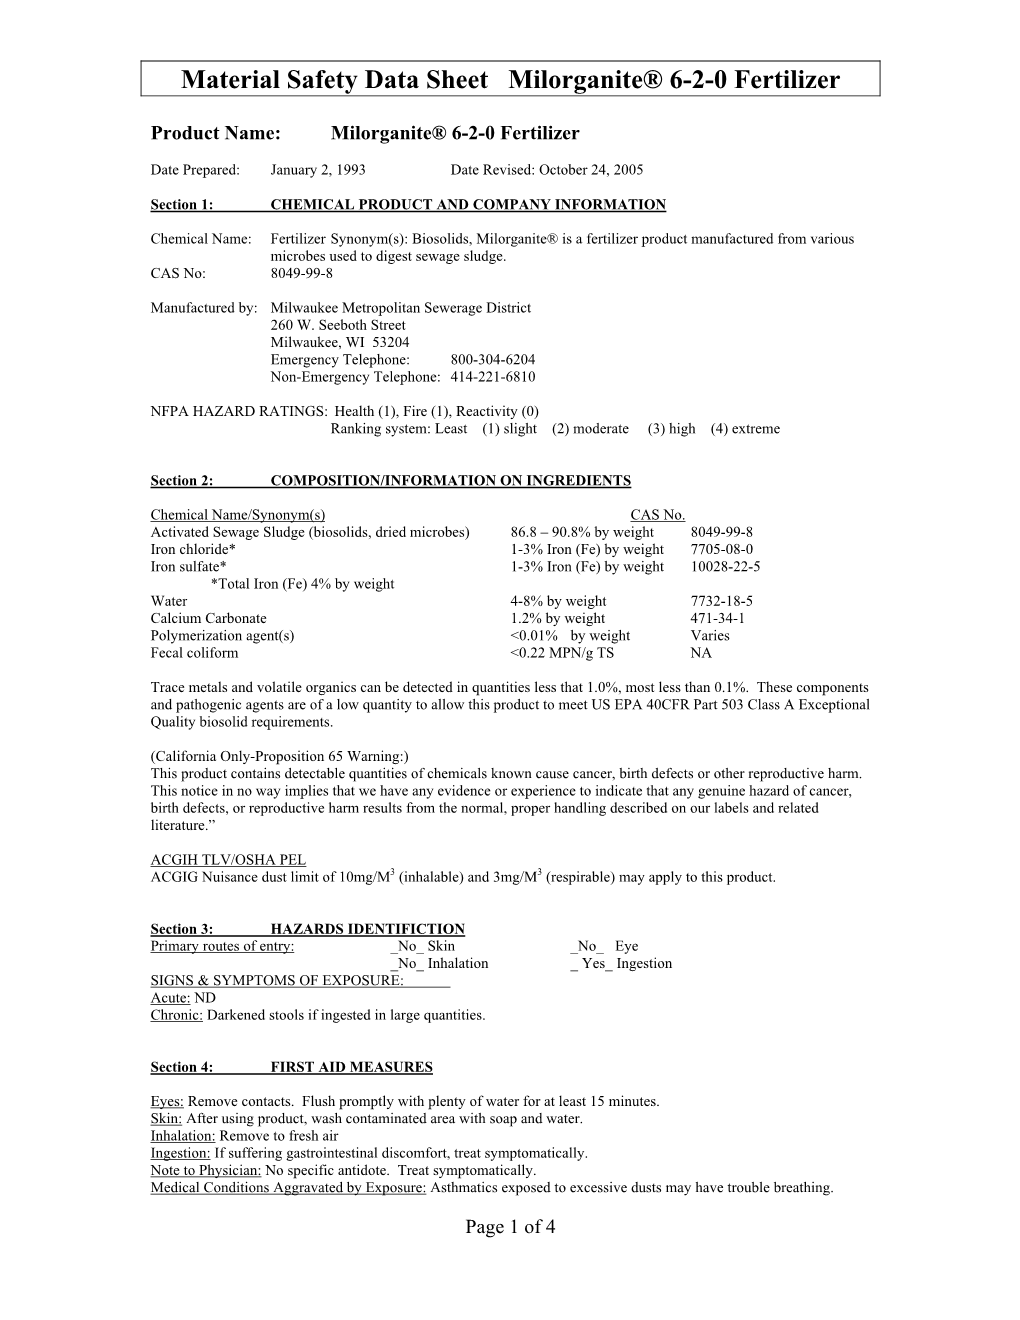 Material Safety Data Sheet Milorganite® 6-2-0 Fertilizer